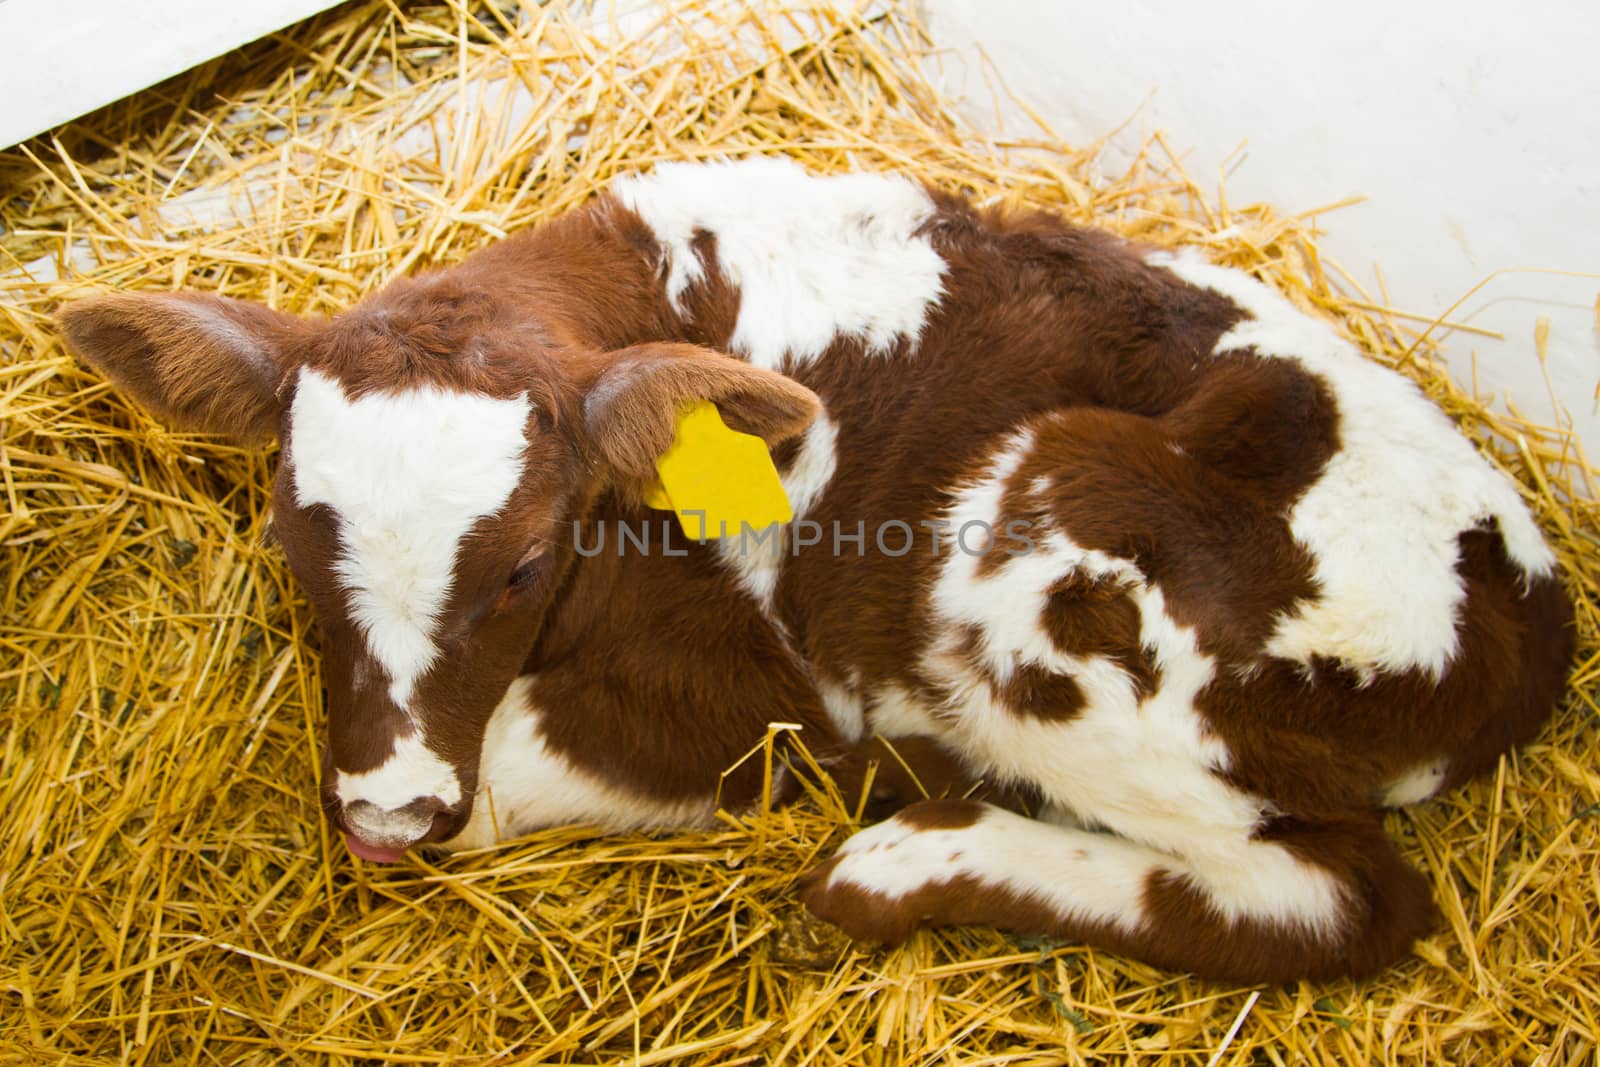 Newborn calf lying on the clean straw in the paddock